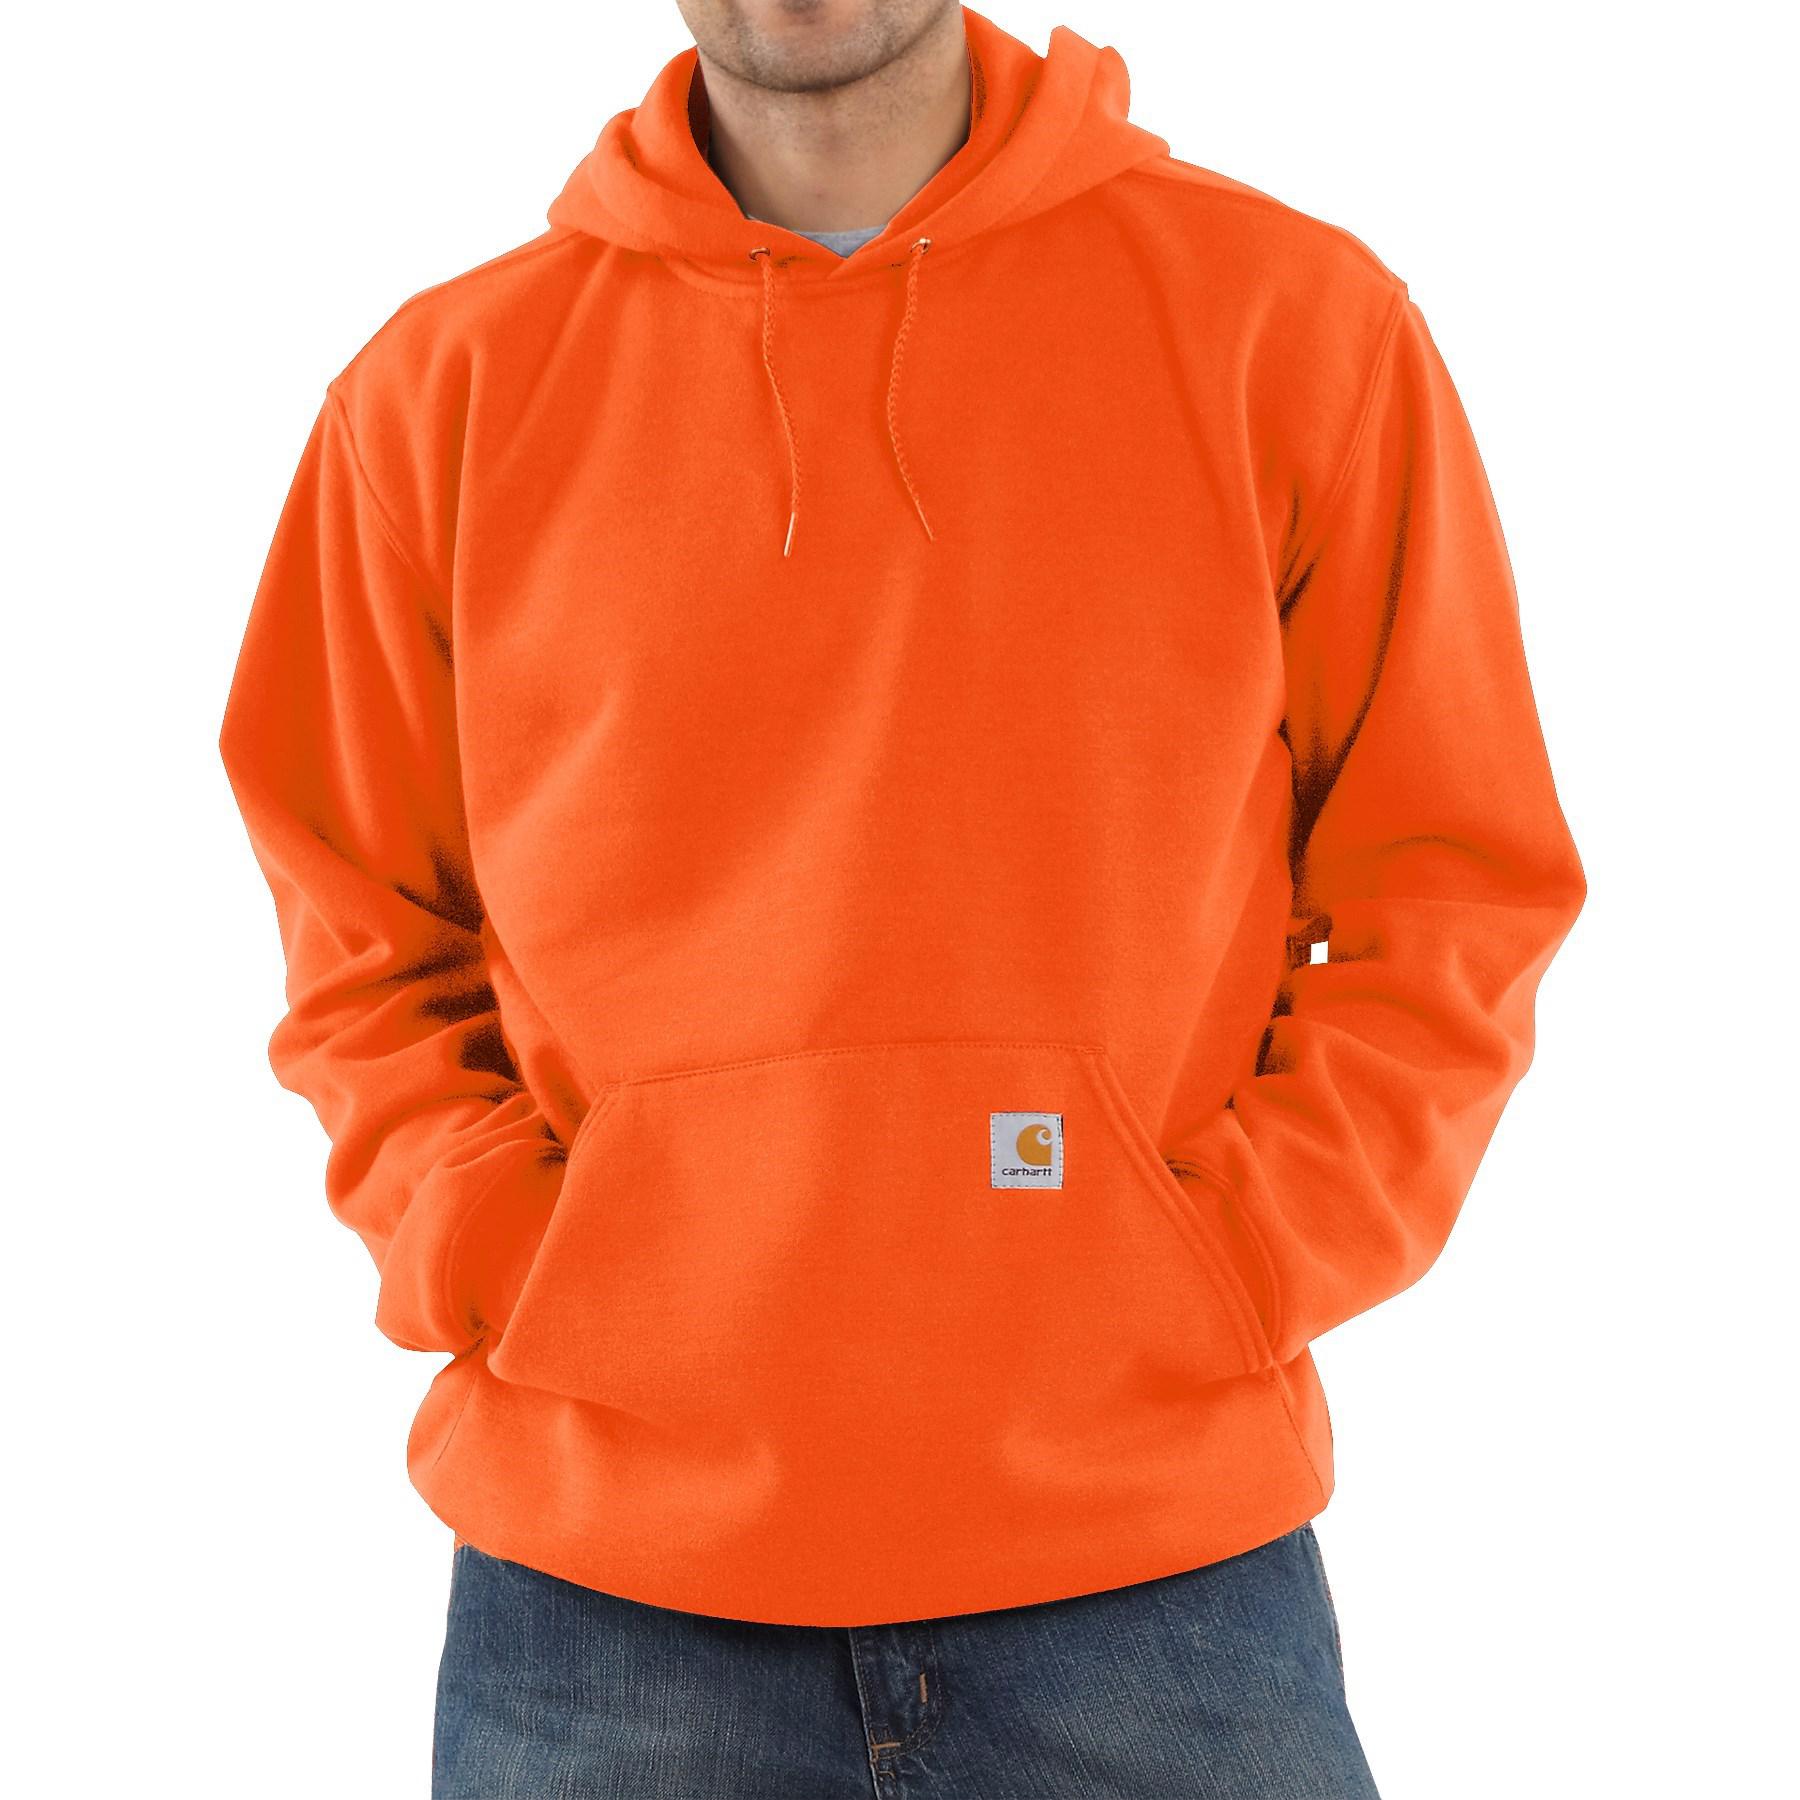 Carhartt Hooded Fleece Sweatshirt (for Tall Men) in Orange for Men - Lyst